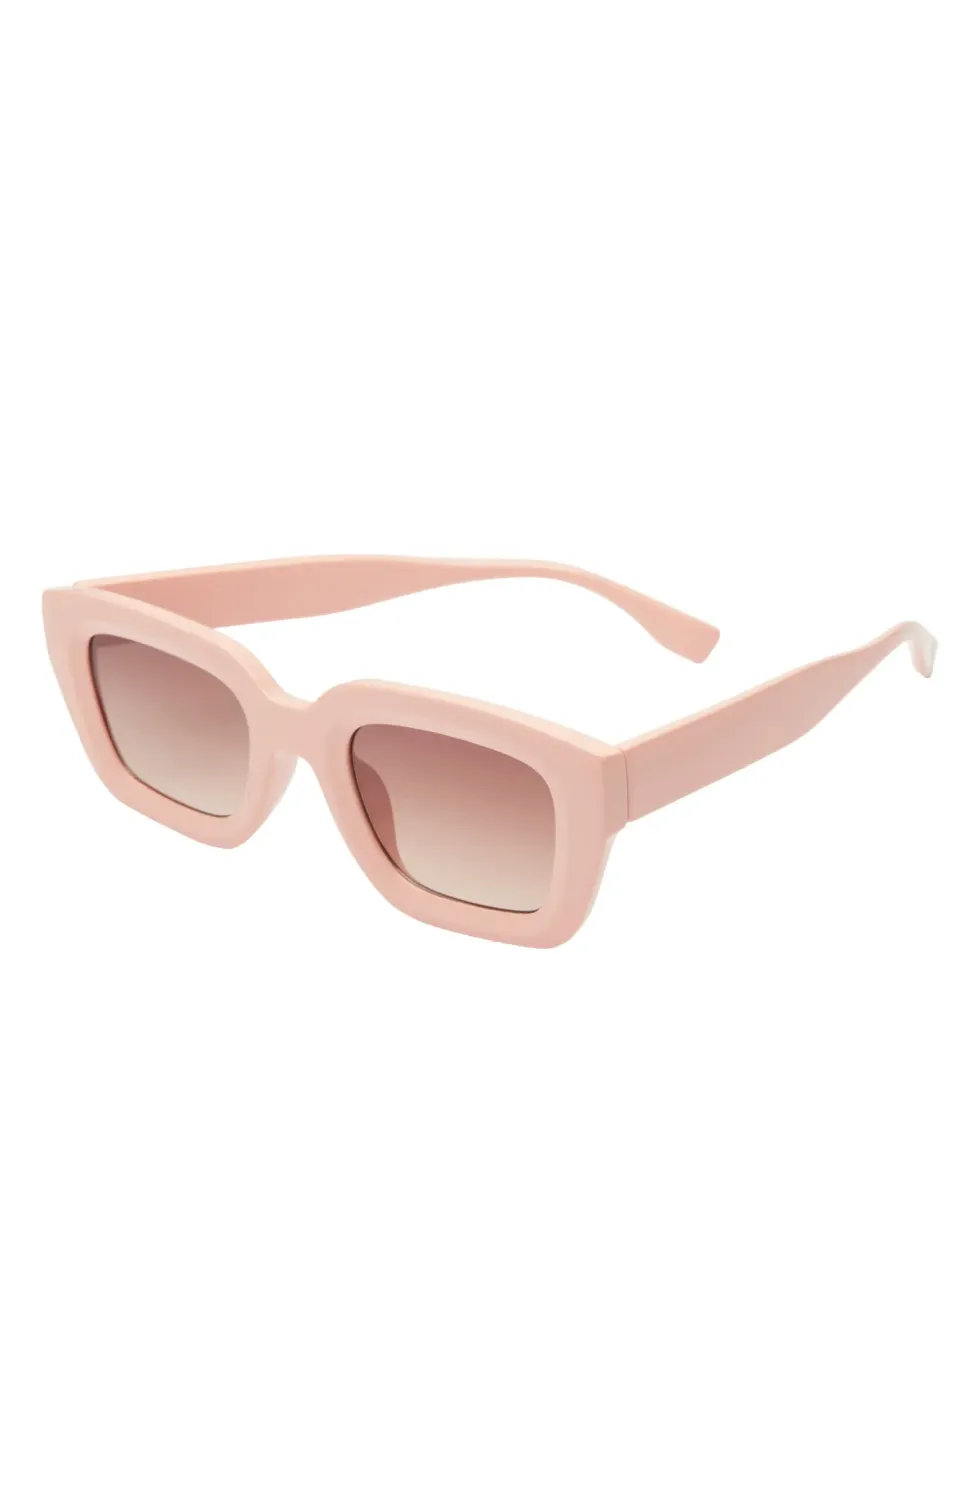 BP Pink Square Cheap Sunglasses